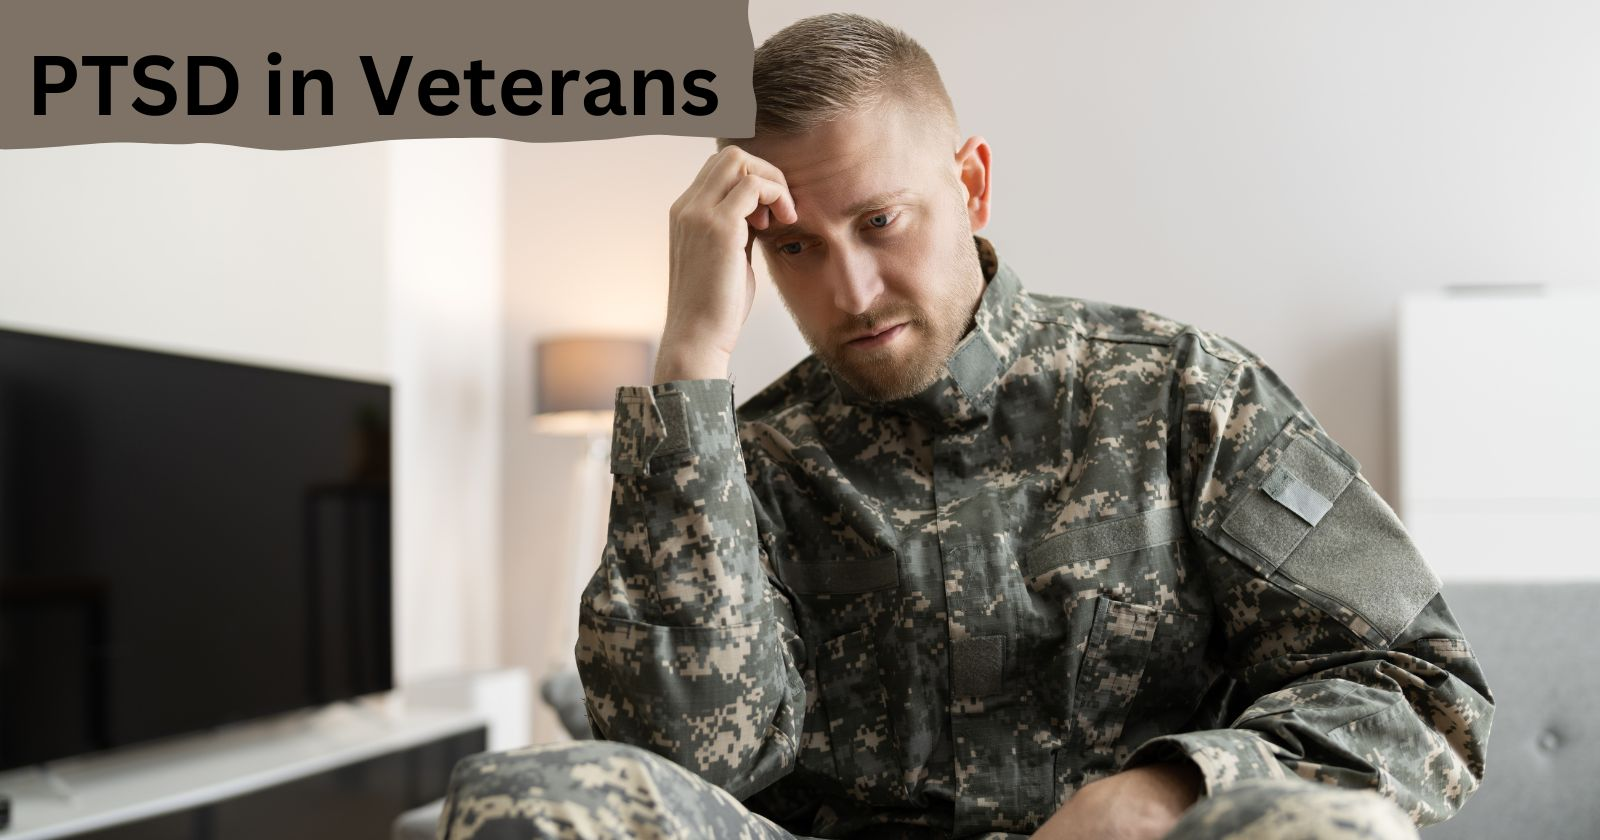 PTSD in Veterans

Male veteran thinking something